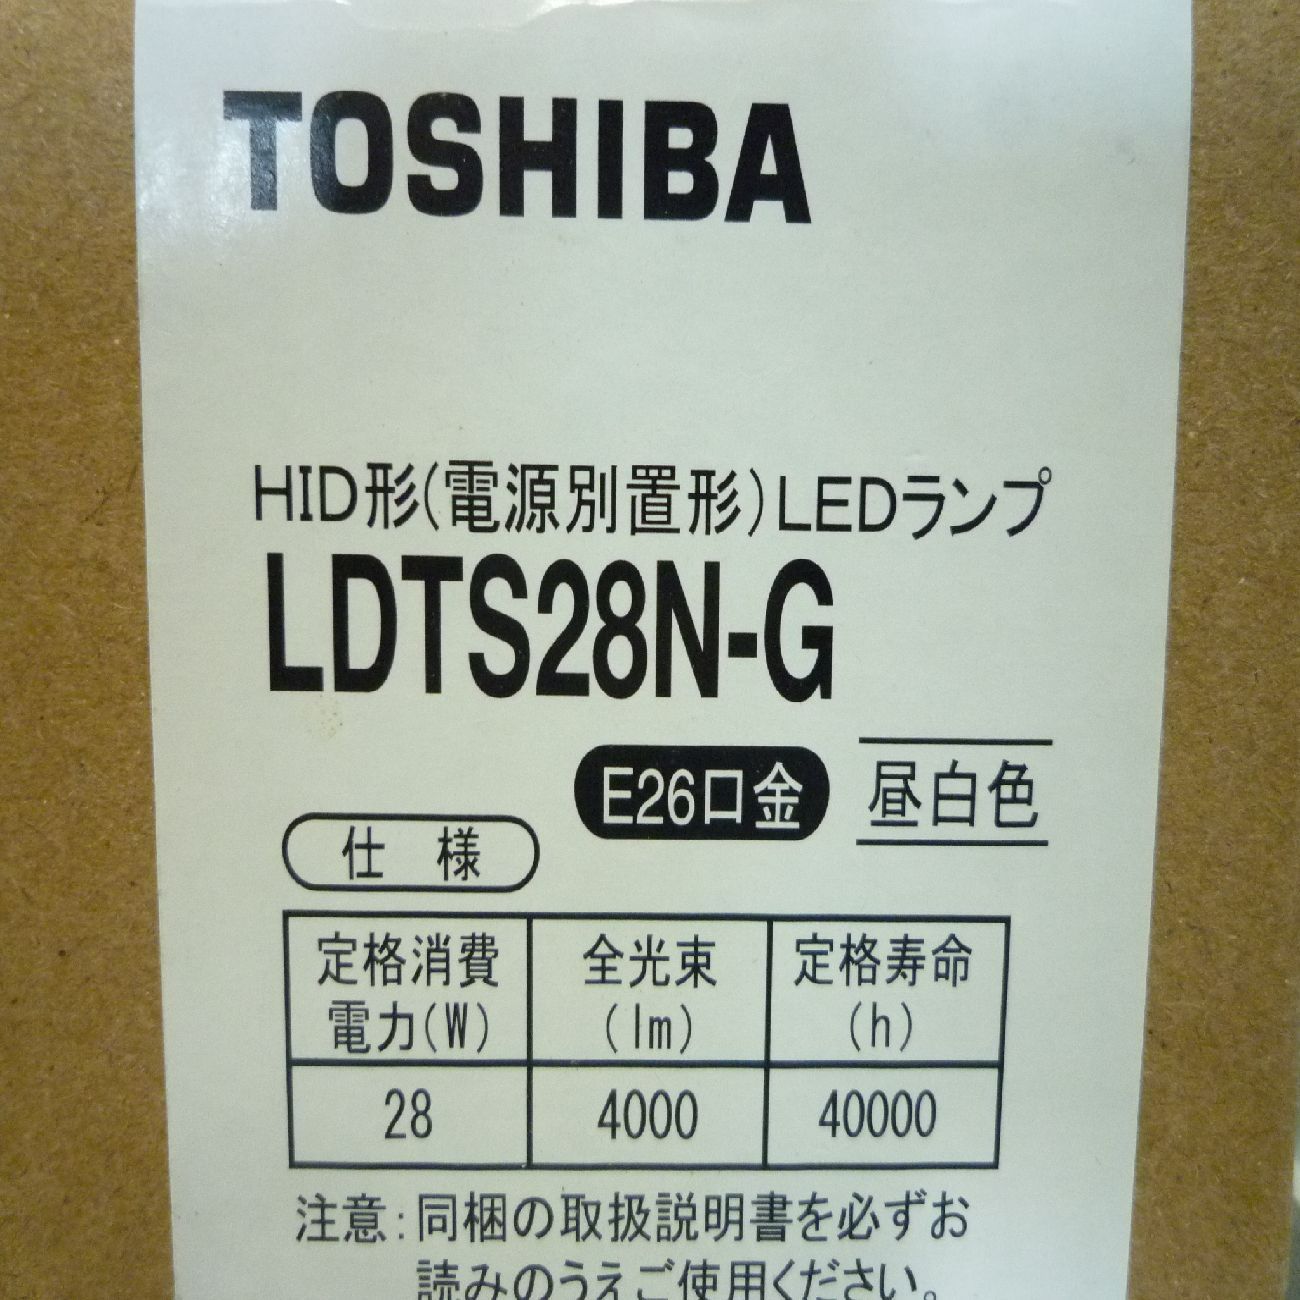 LDTS28N-G HID形LEDランプ 昼白色 E26口金 東芝